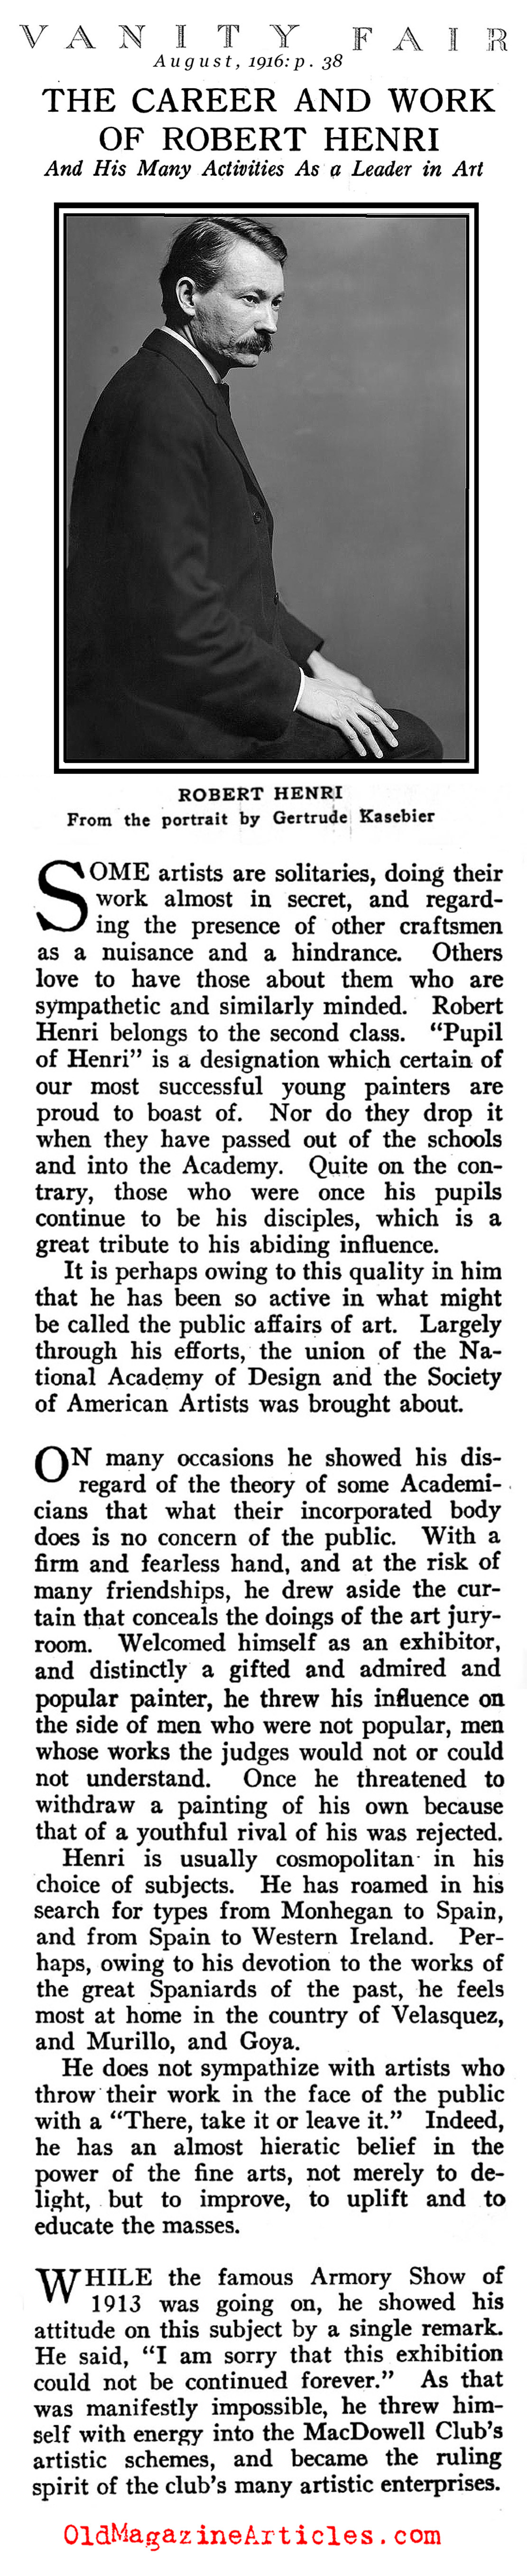 Robert Henri (Vanity Fair Magazine, 1916)